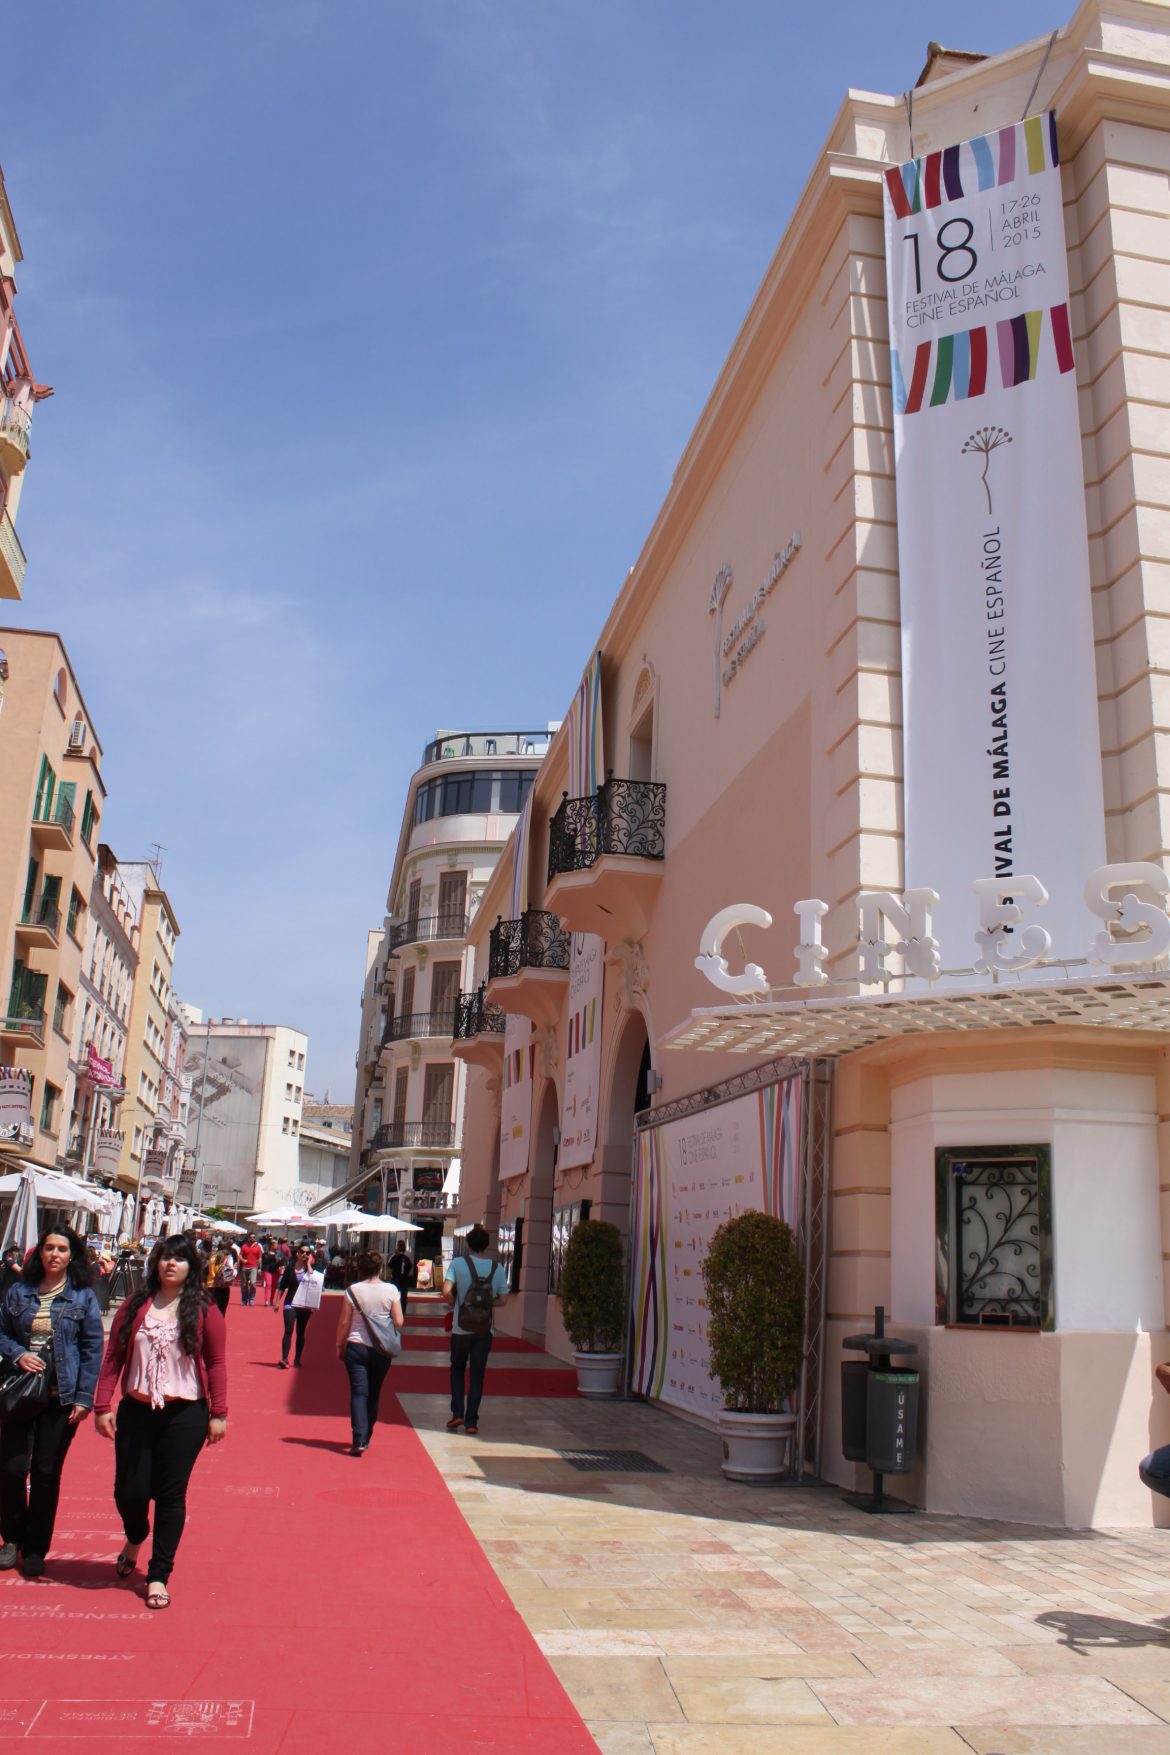 Kinos in Malaga - Spanischkurse bei CILE